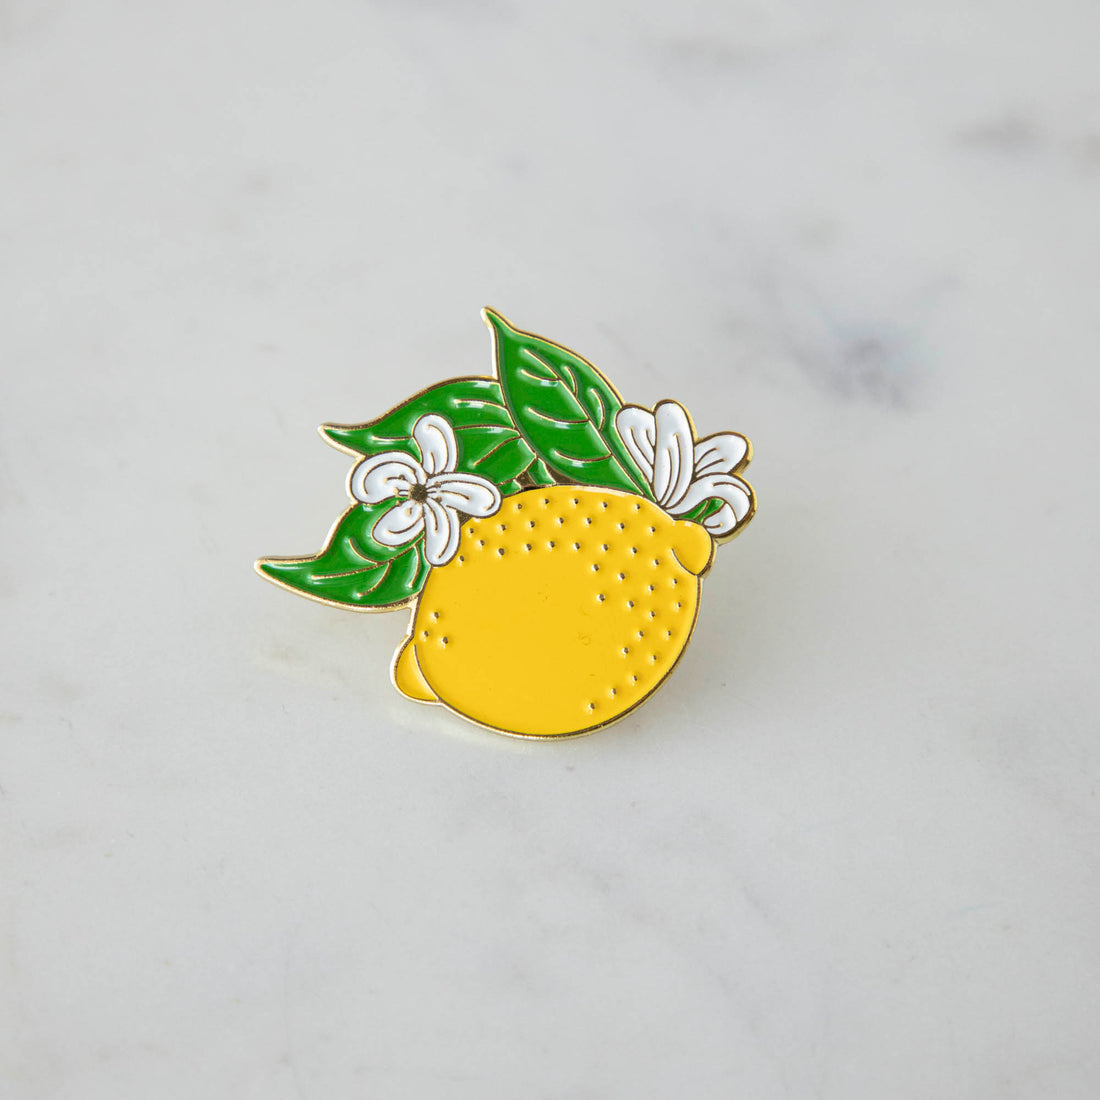 A Hester &amp; Cook Lemon Enamel Pin adorned with leaves.